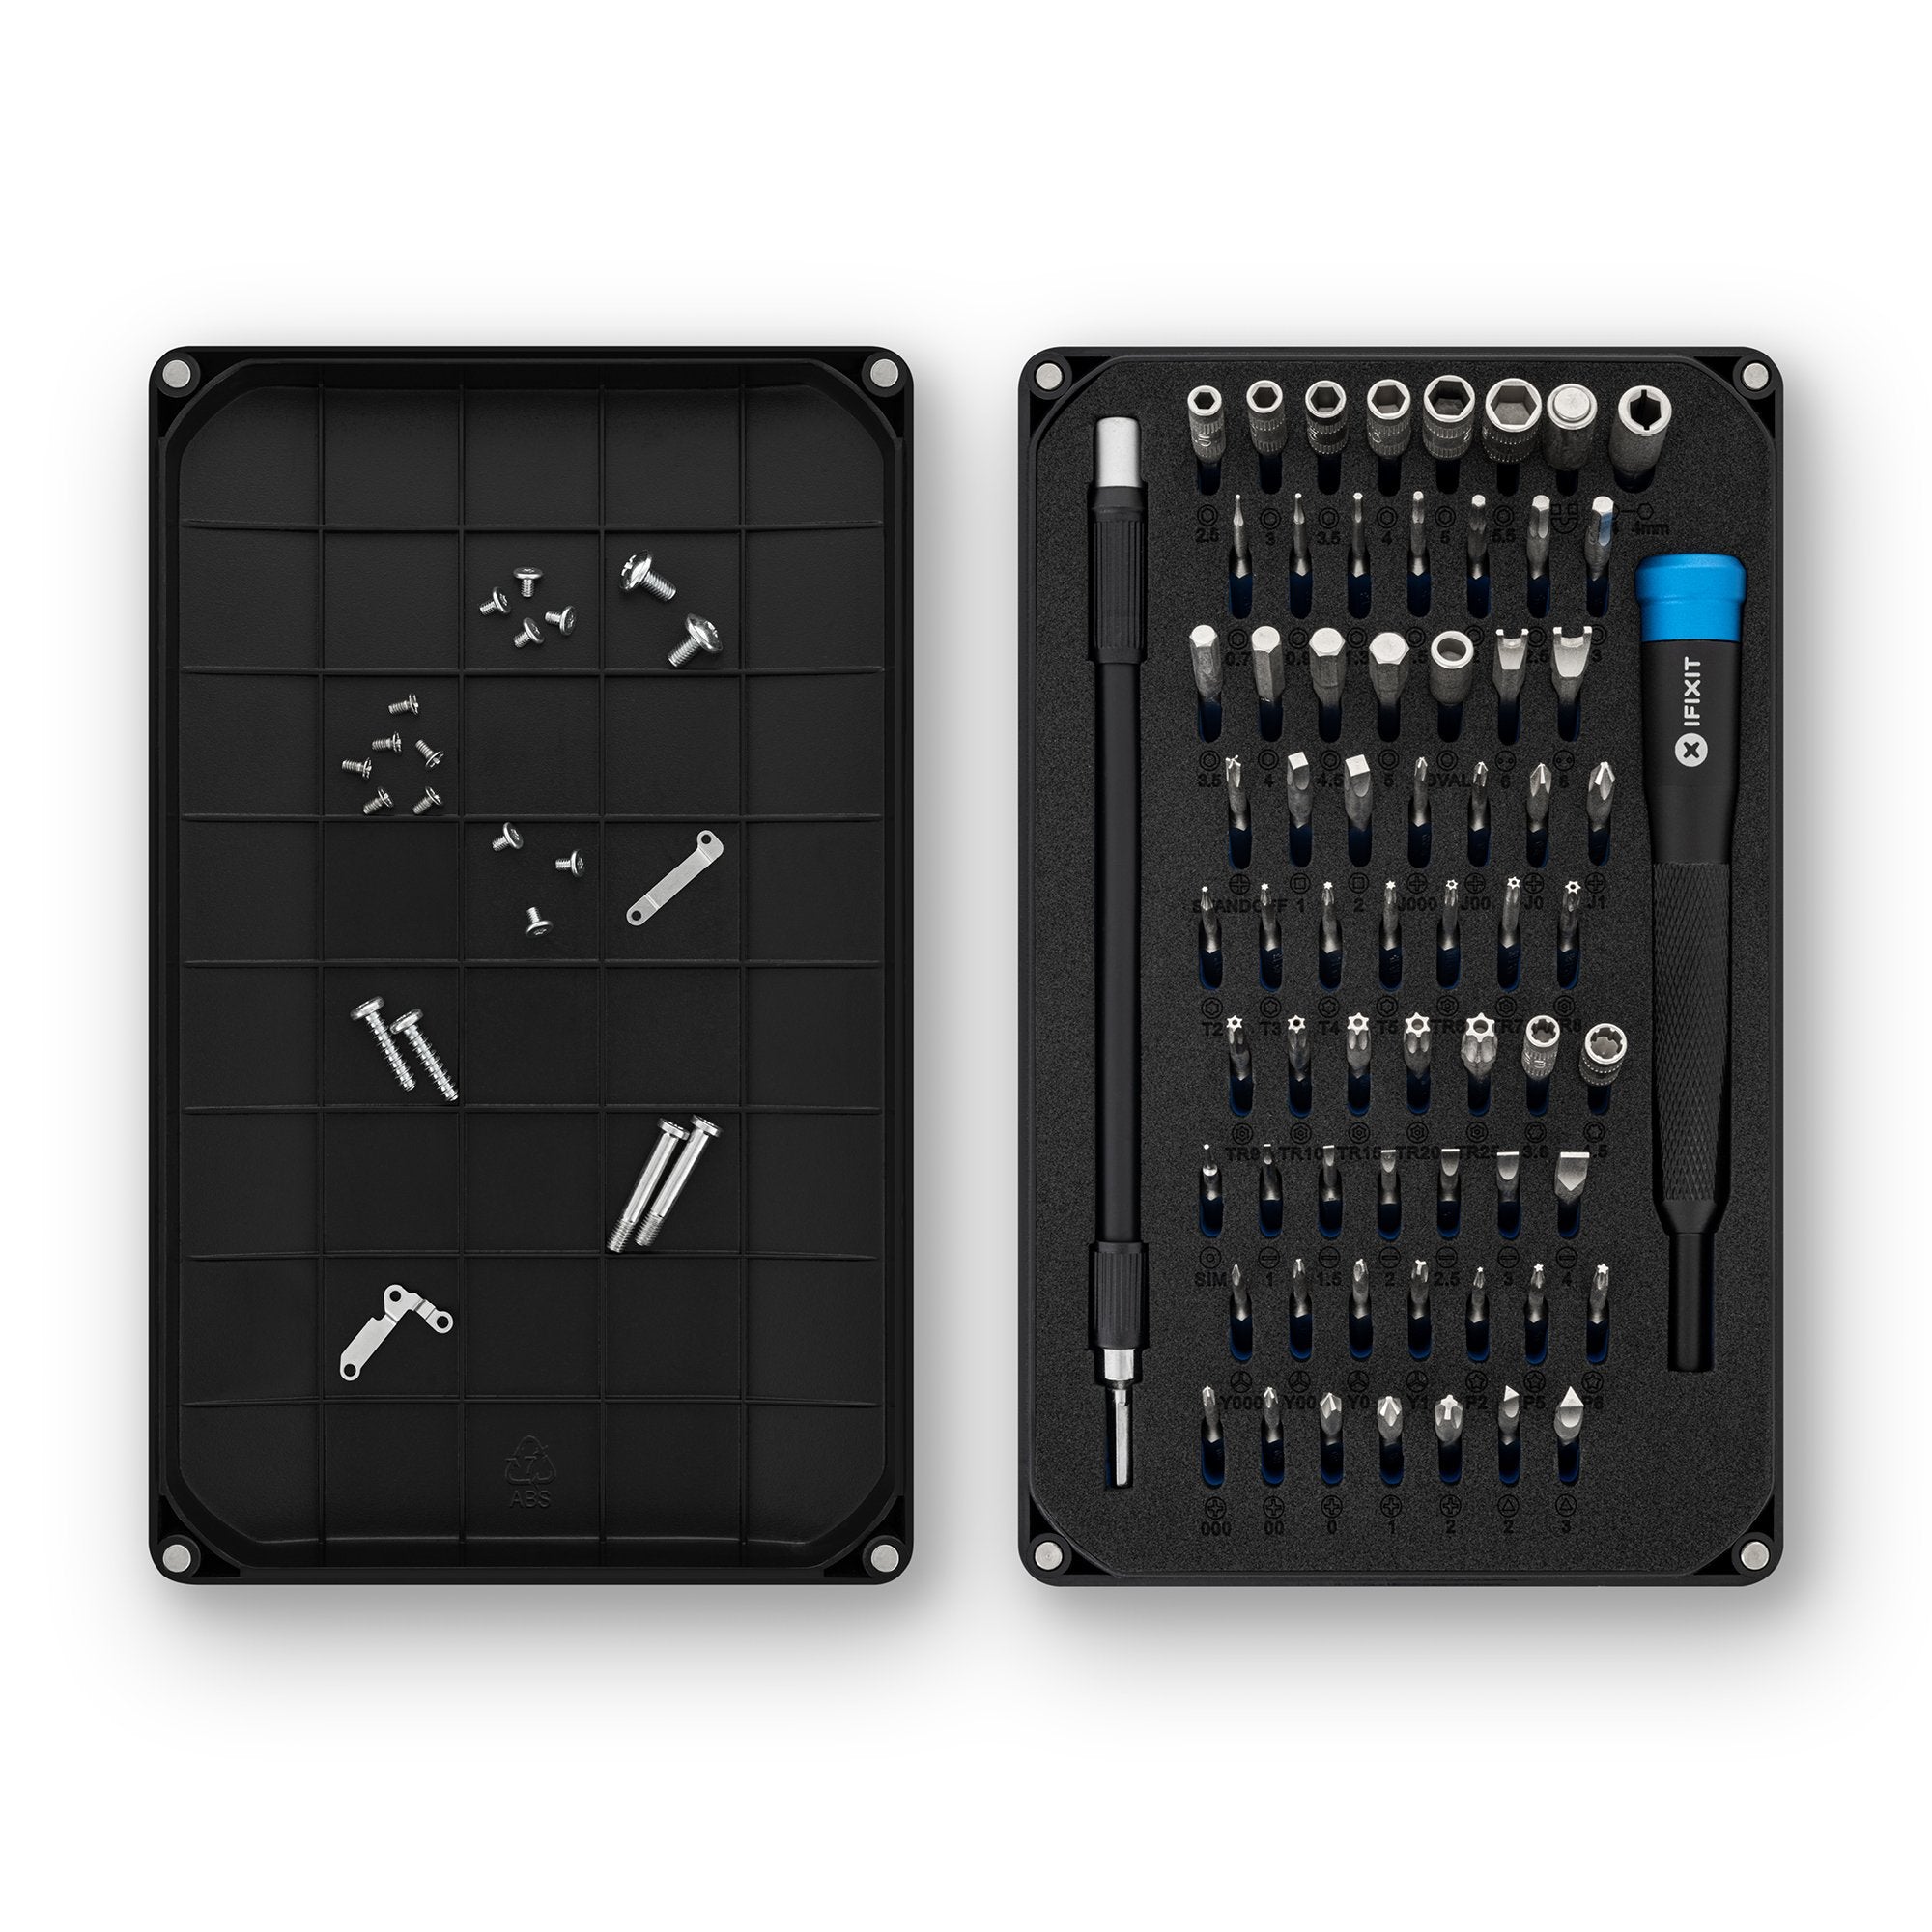 iFixit Mako Driver Kit: Precision Screwdriver Bit Set for Electronics